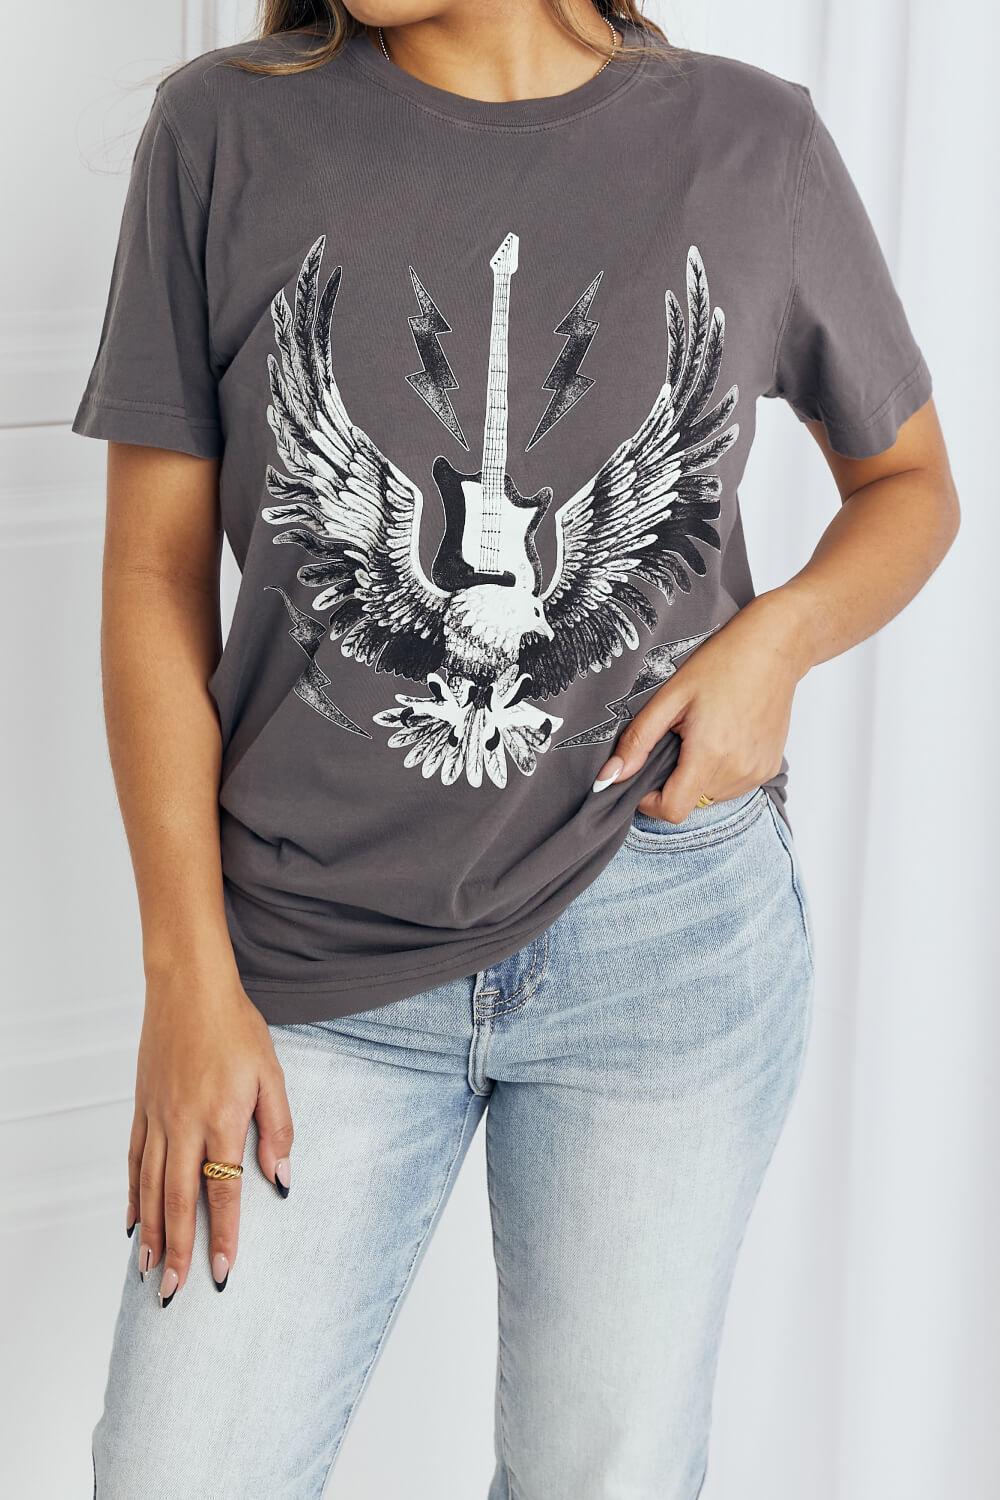 Soar High Eagle Graphic Tee Shirt - MXSTUDIO.COM